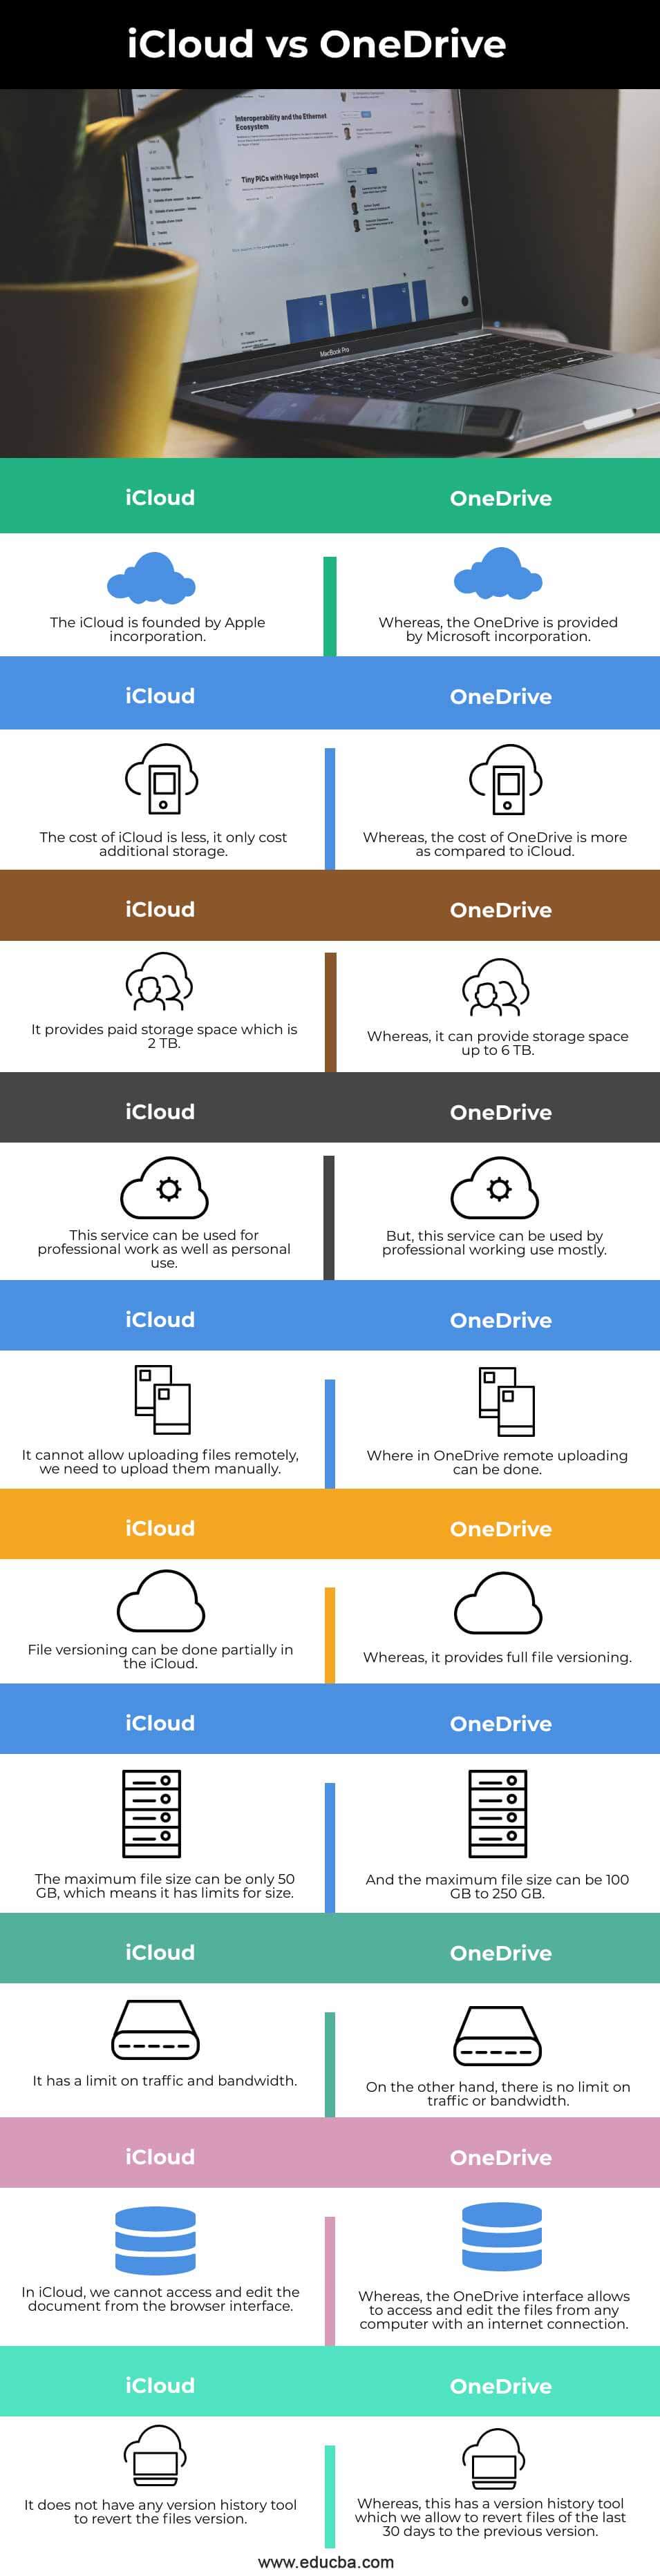 iCloud-vs-OneDrive-info